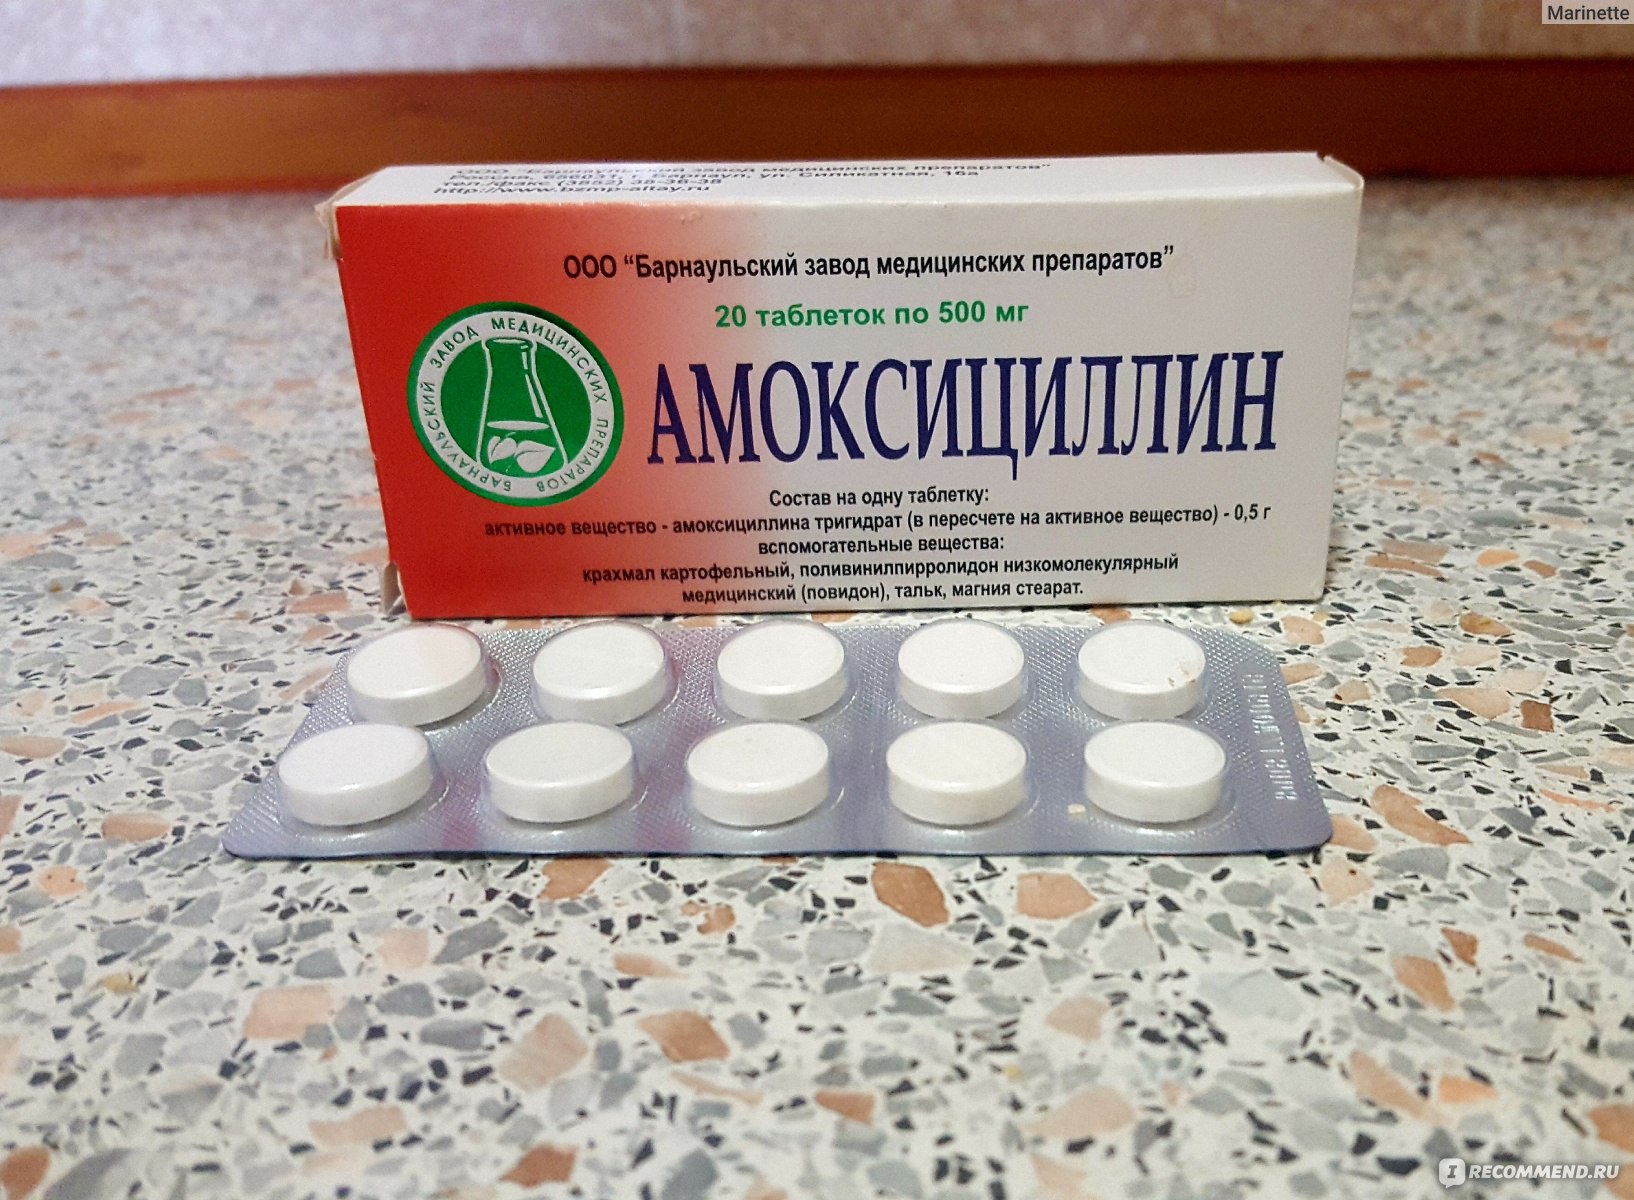 Амоксицилиновая группа антибиотиков. Антибиотик амоксициллин 500 мг. Амоксициллин 500 таблетки антибиотик. Амоксициллин 3 таблетки. Амоксициллин 500 мг таблетки.